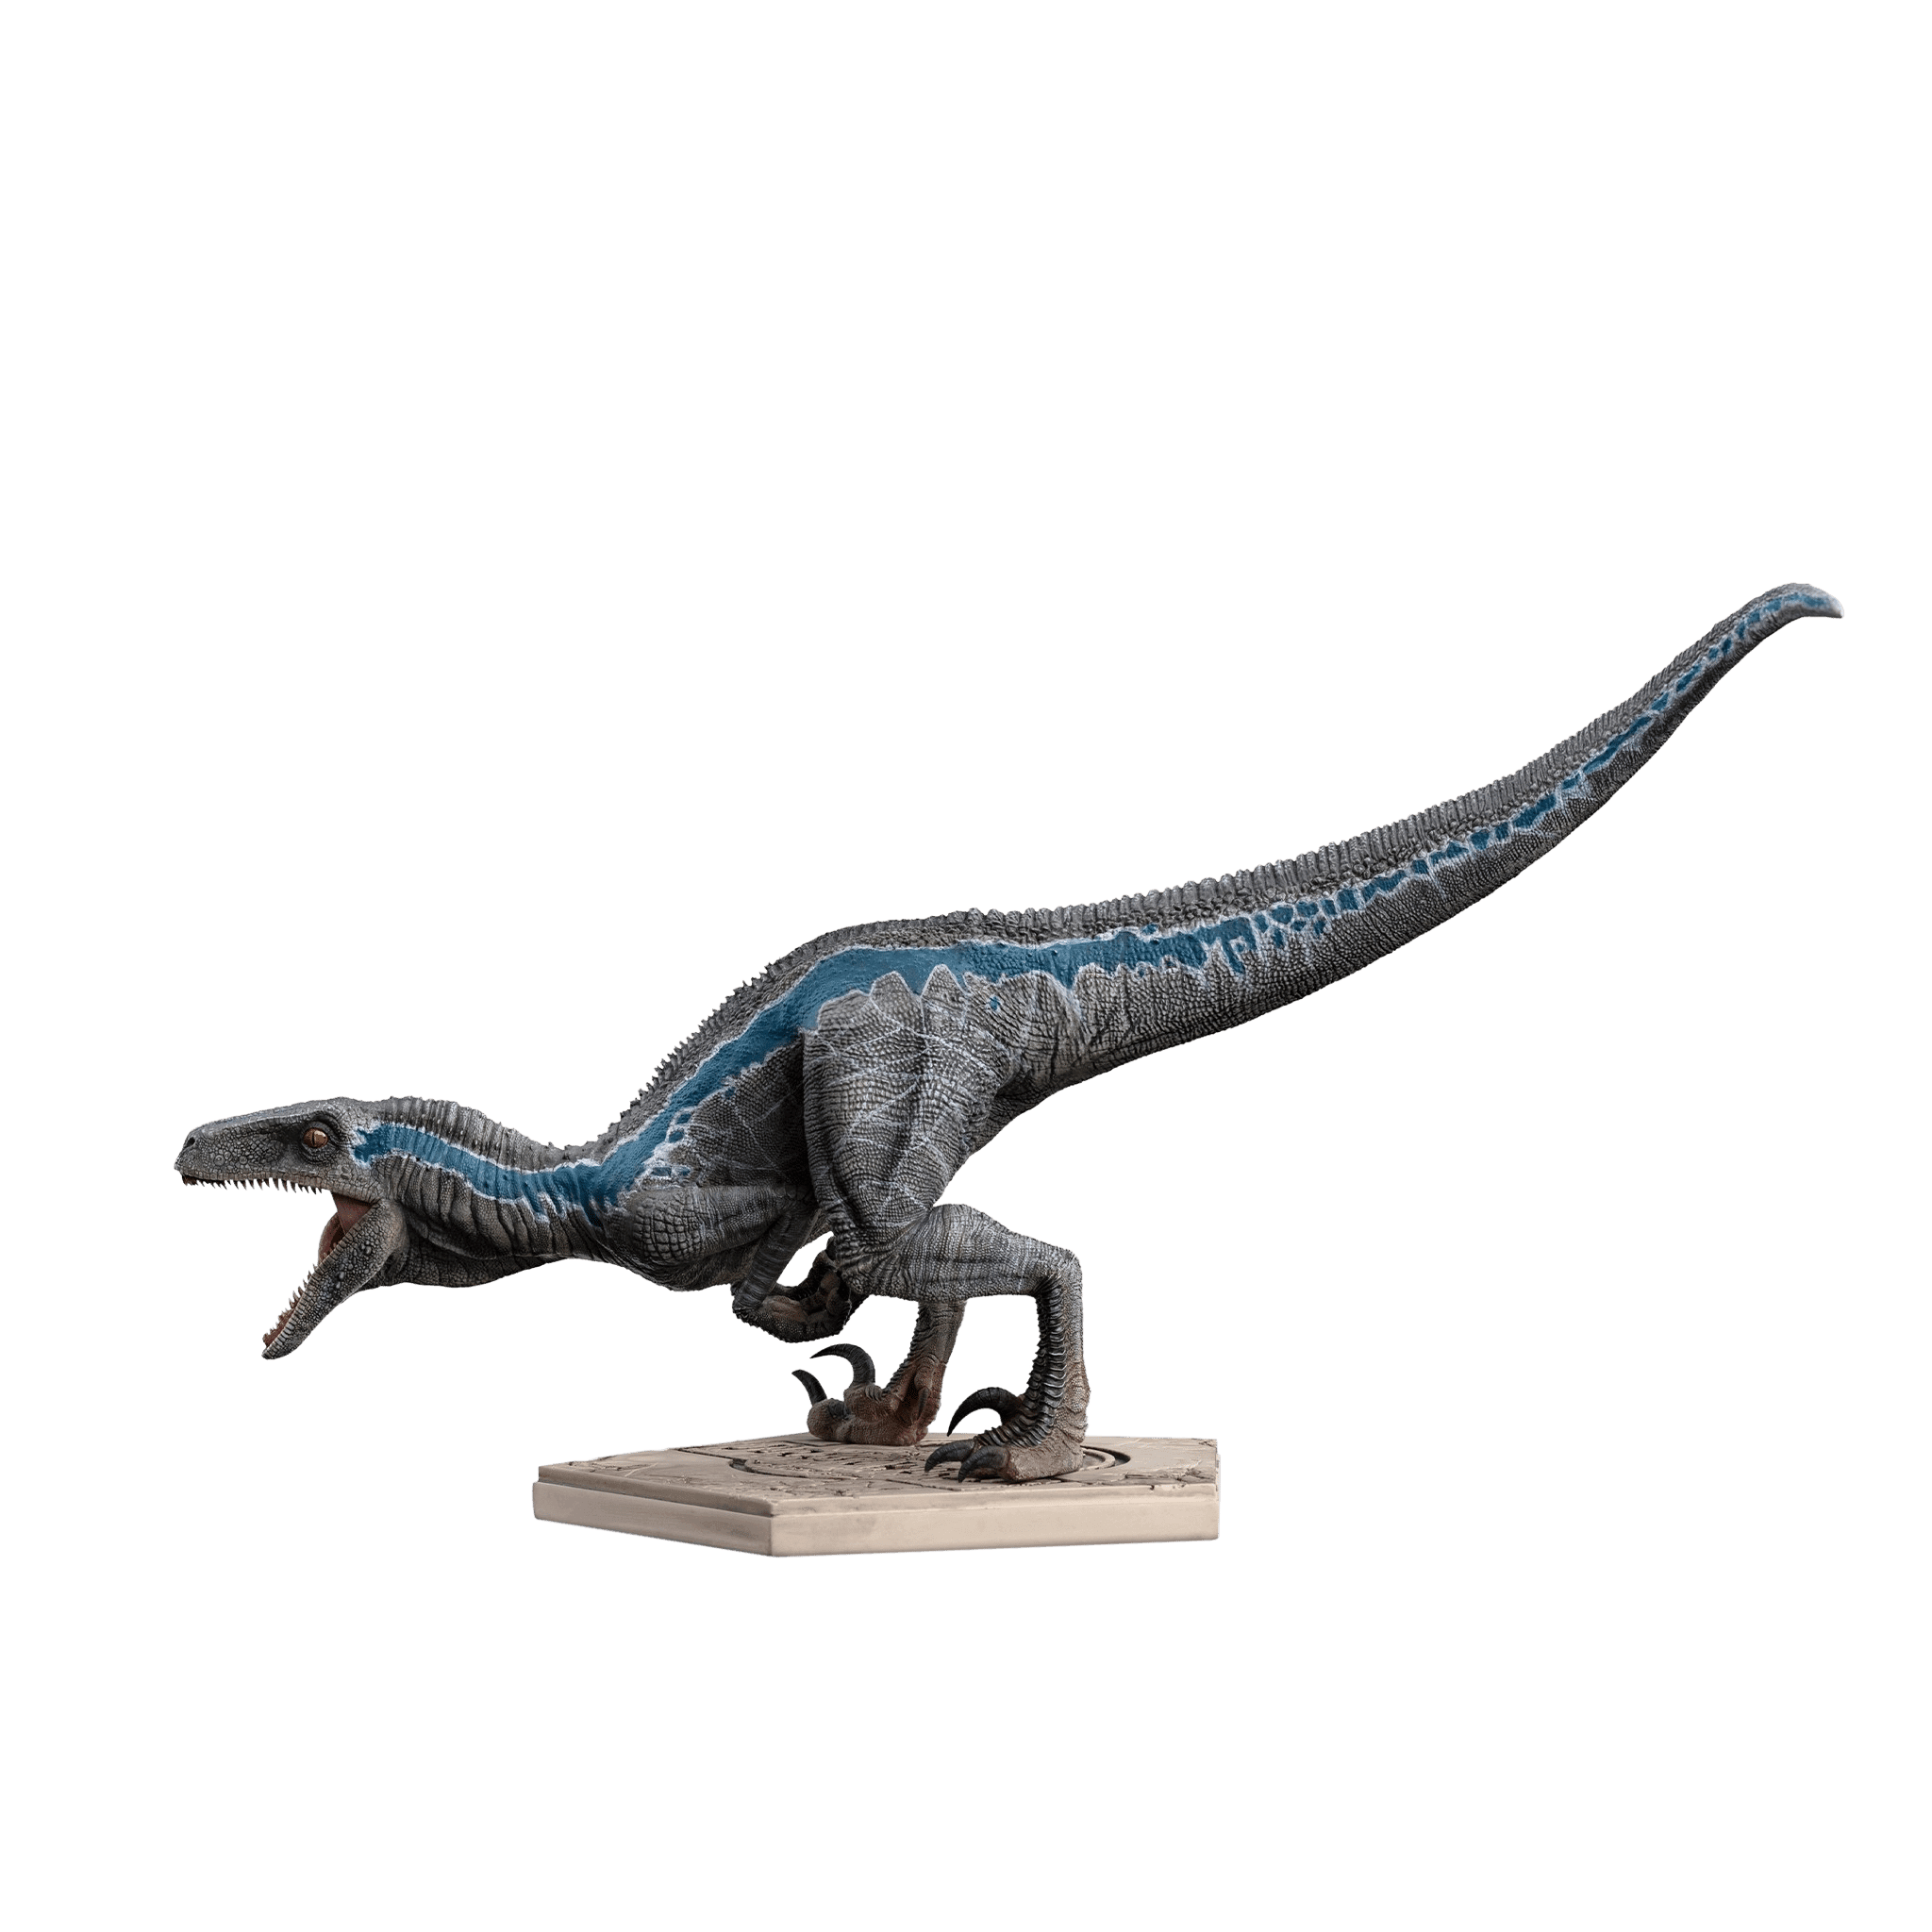 Iron Studios - Jurassic Park Demi Art Scale The Final Scene - 1/20 Figurine